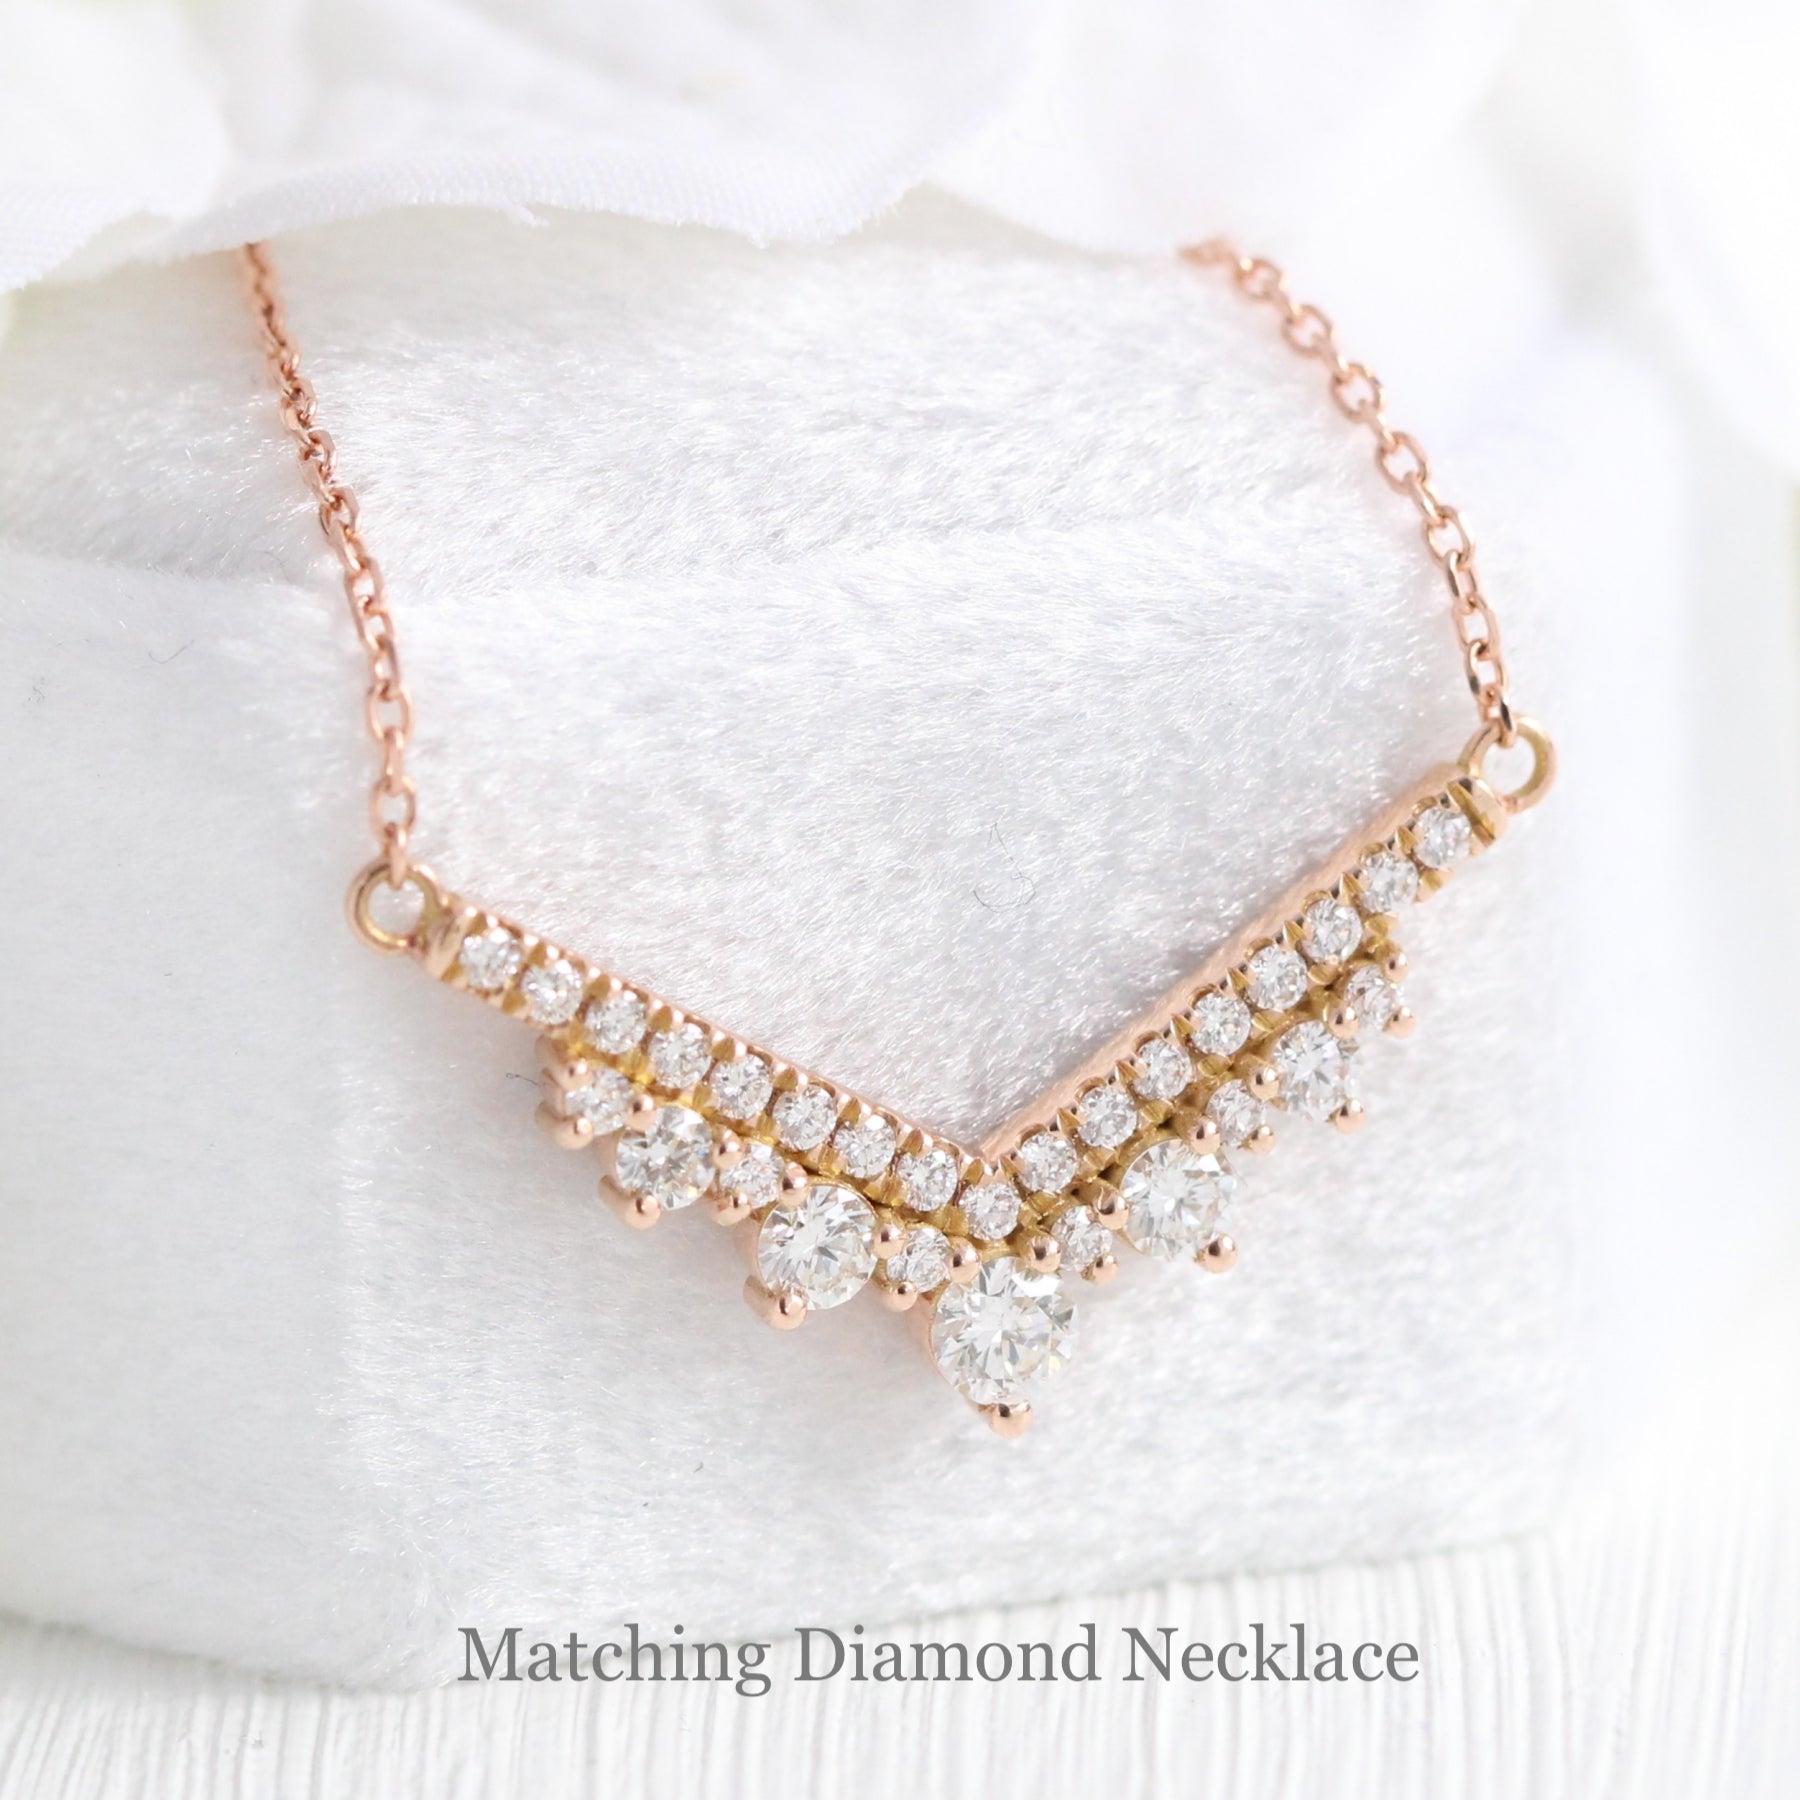 Large tiara diamond pendant rose gold drop necklace adjustable gold chain la more design jewelry